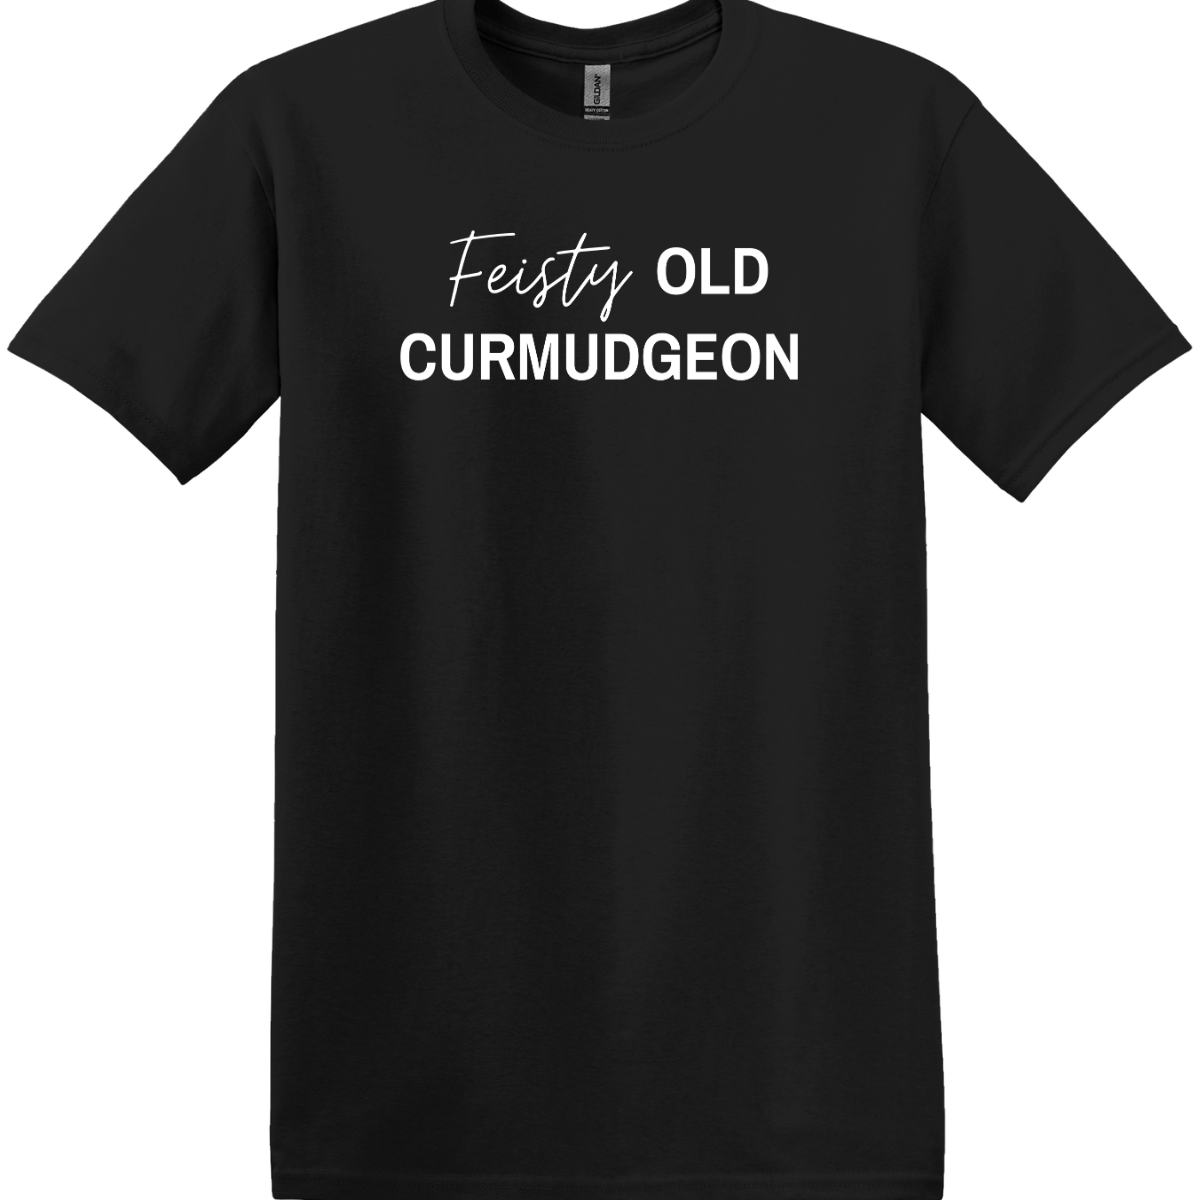 Feisty Old Curmudgeon Tee